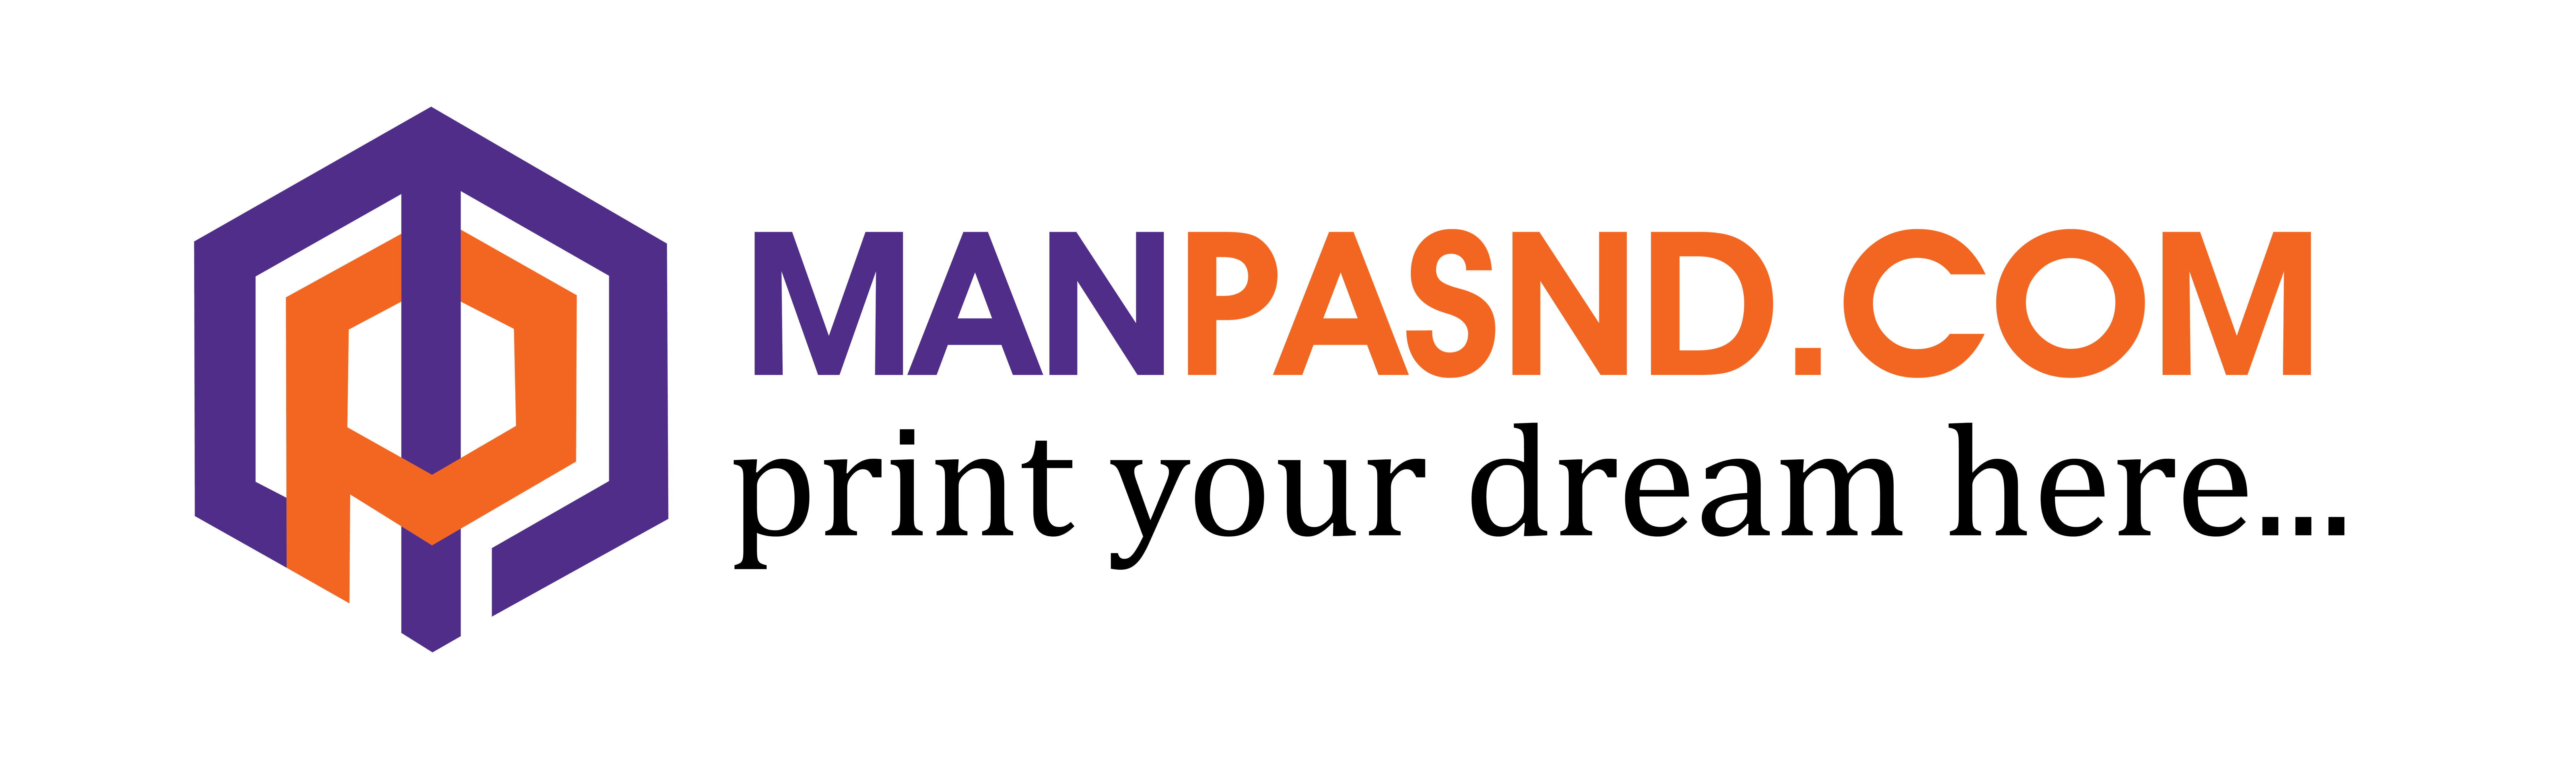 ManPasnd - Print your dream here